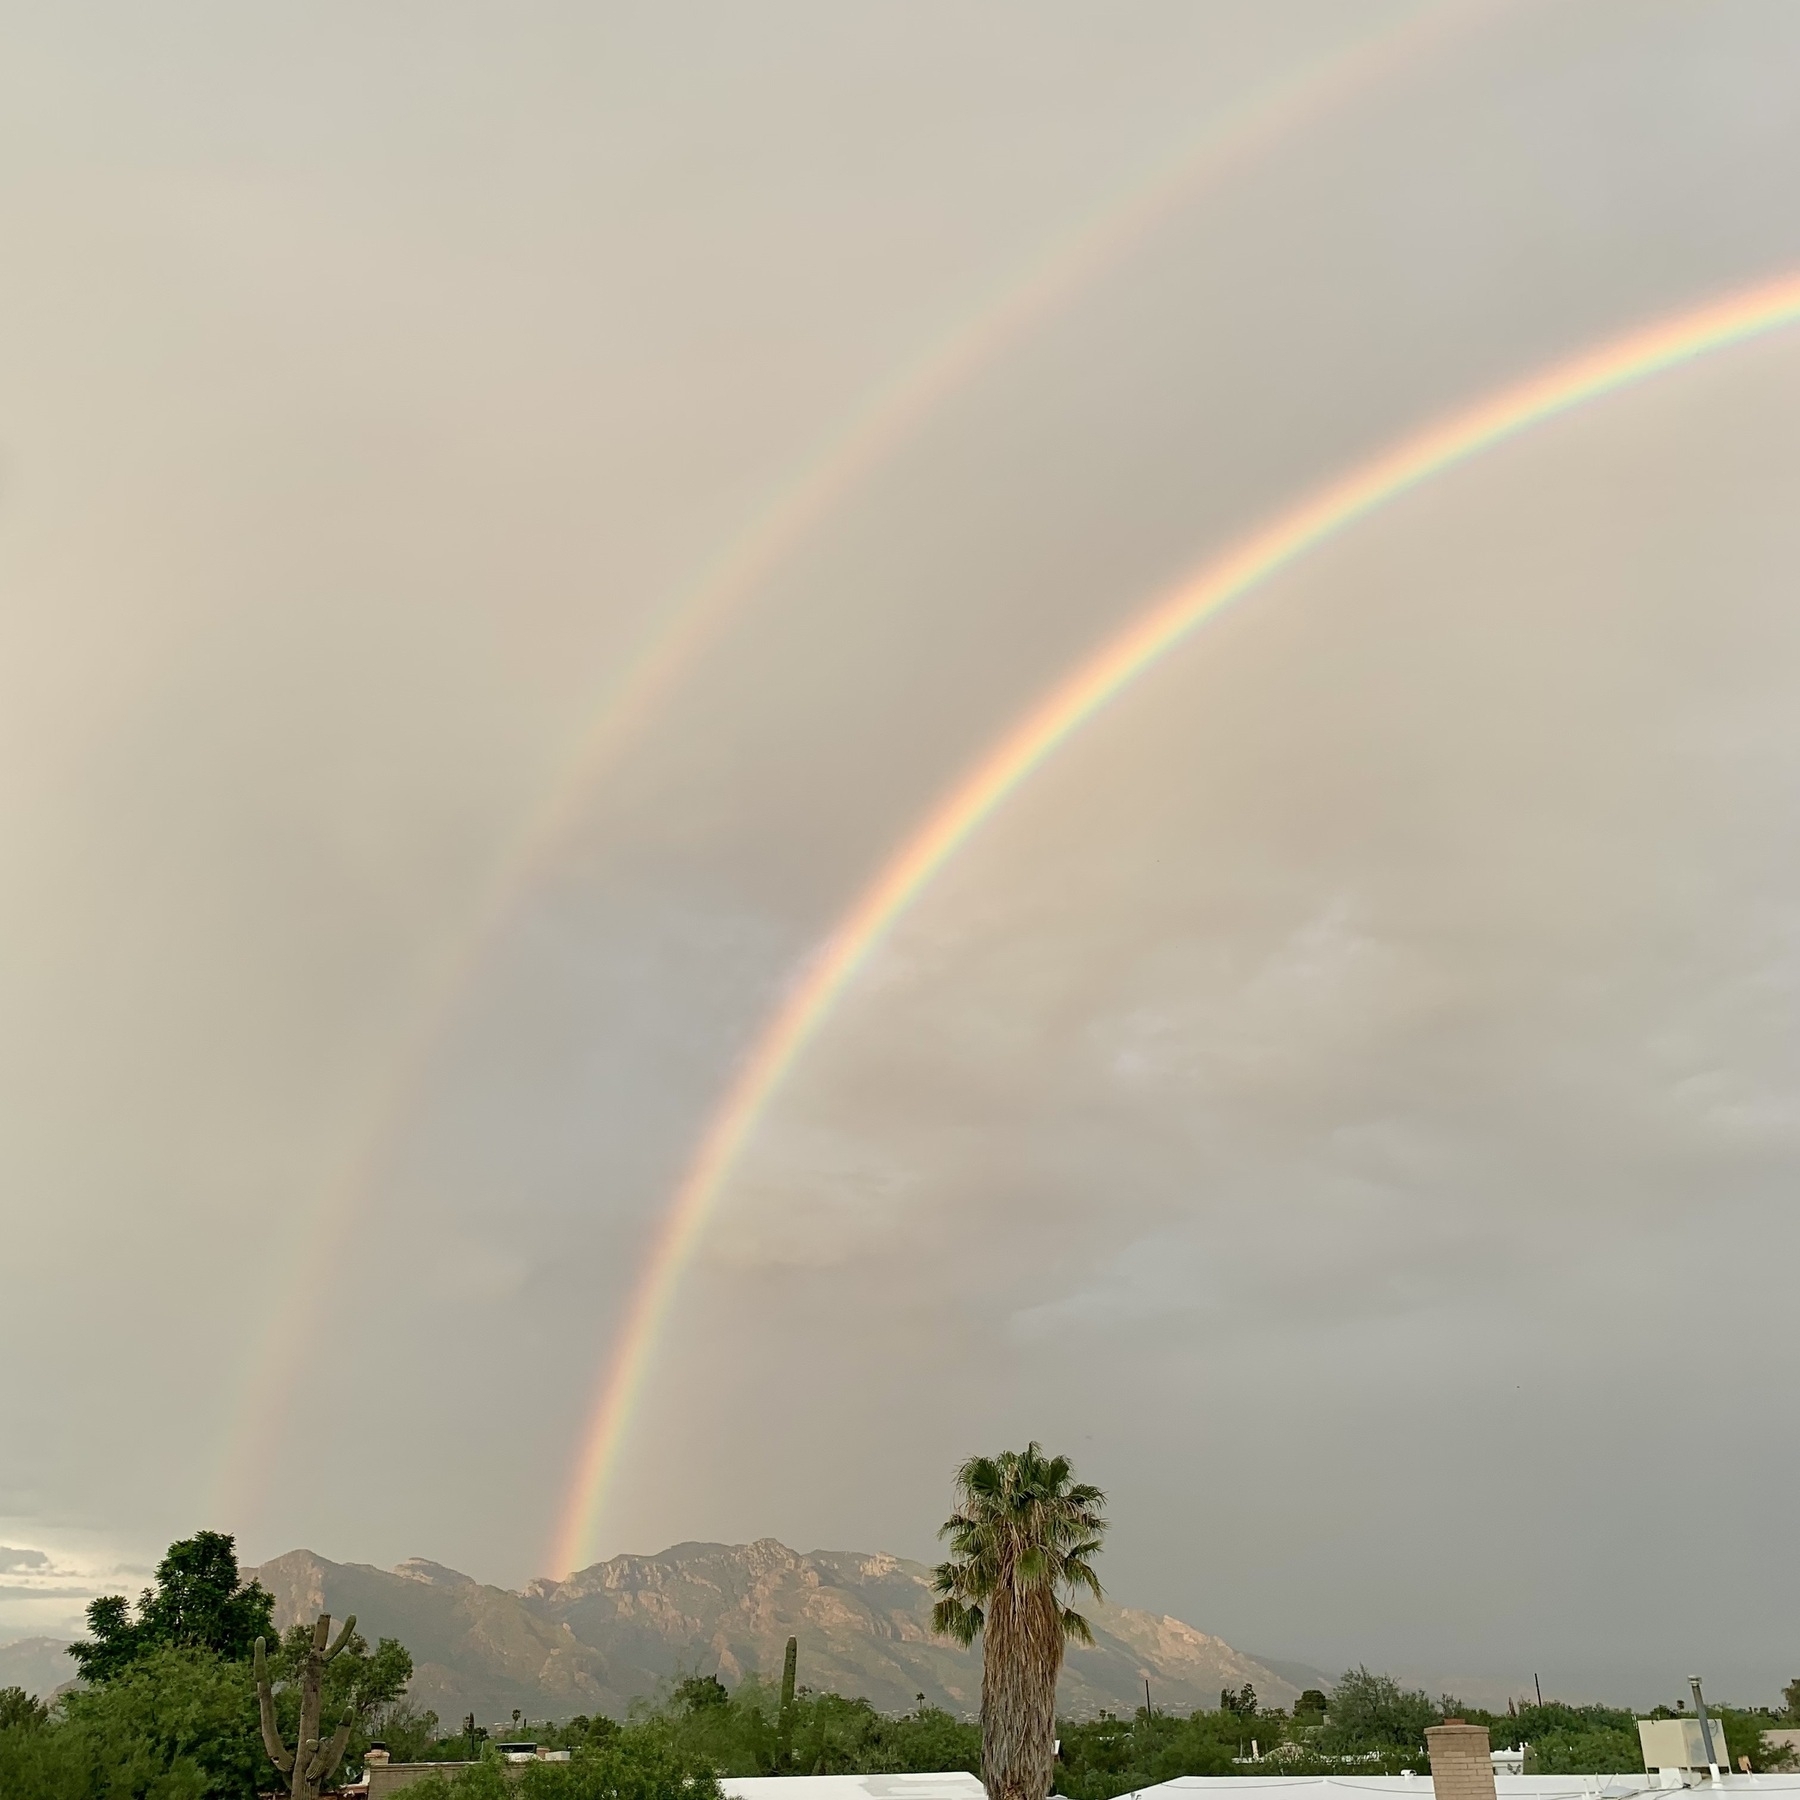 a double rainbow over the Santa Catalina Mountains